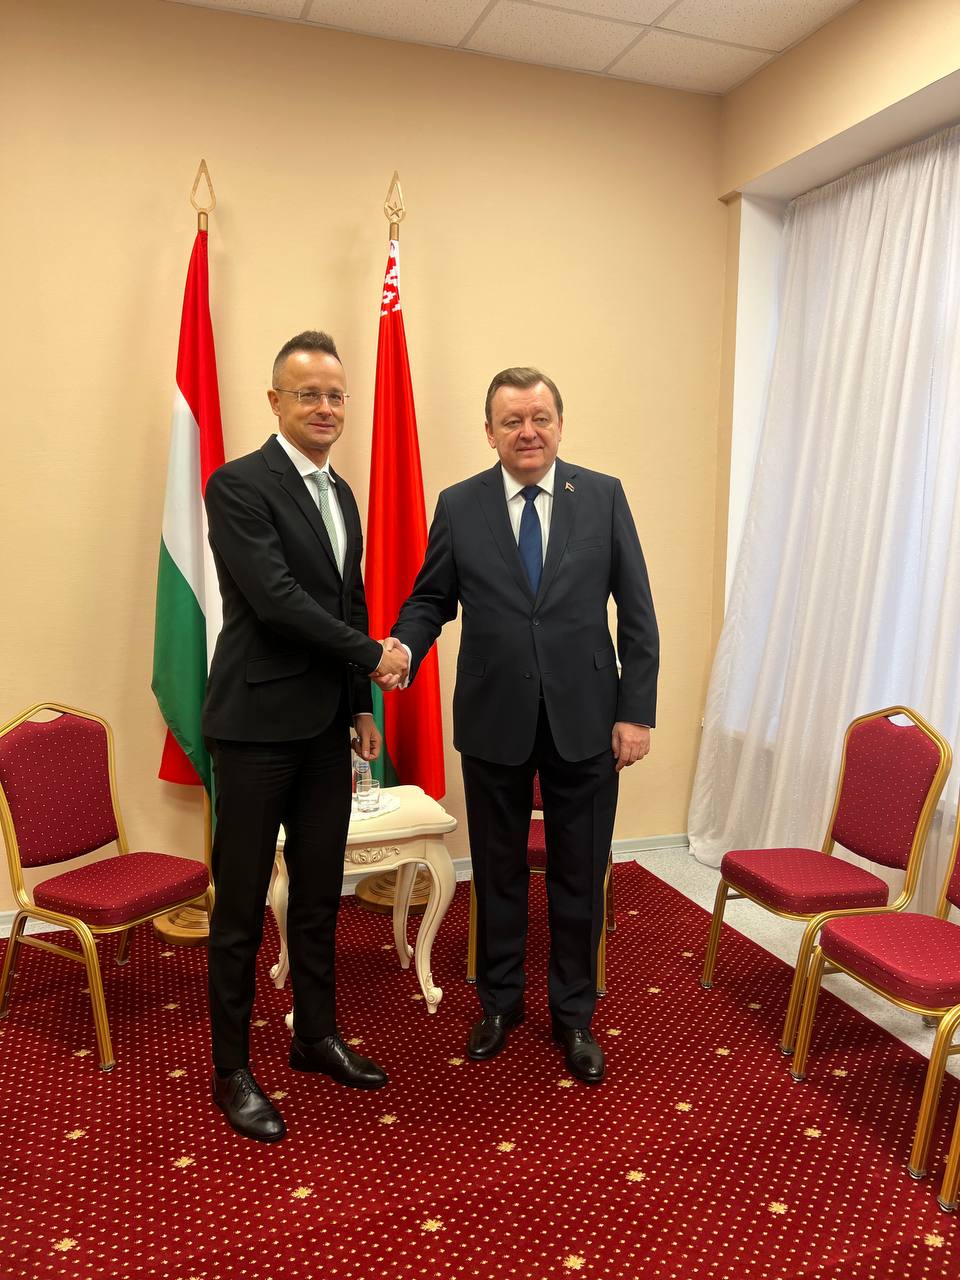 Глава МИД Венгрии примет участие в конференции по безопасности в Минске